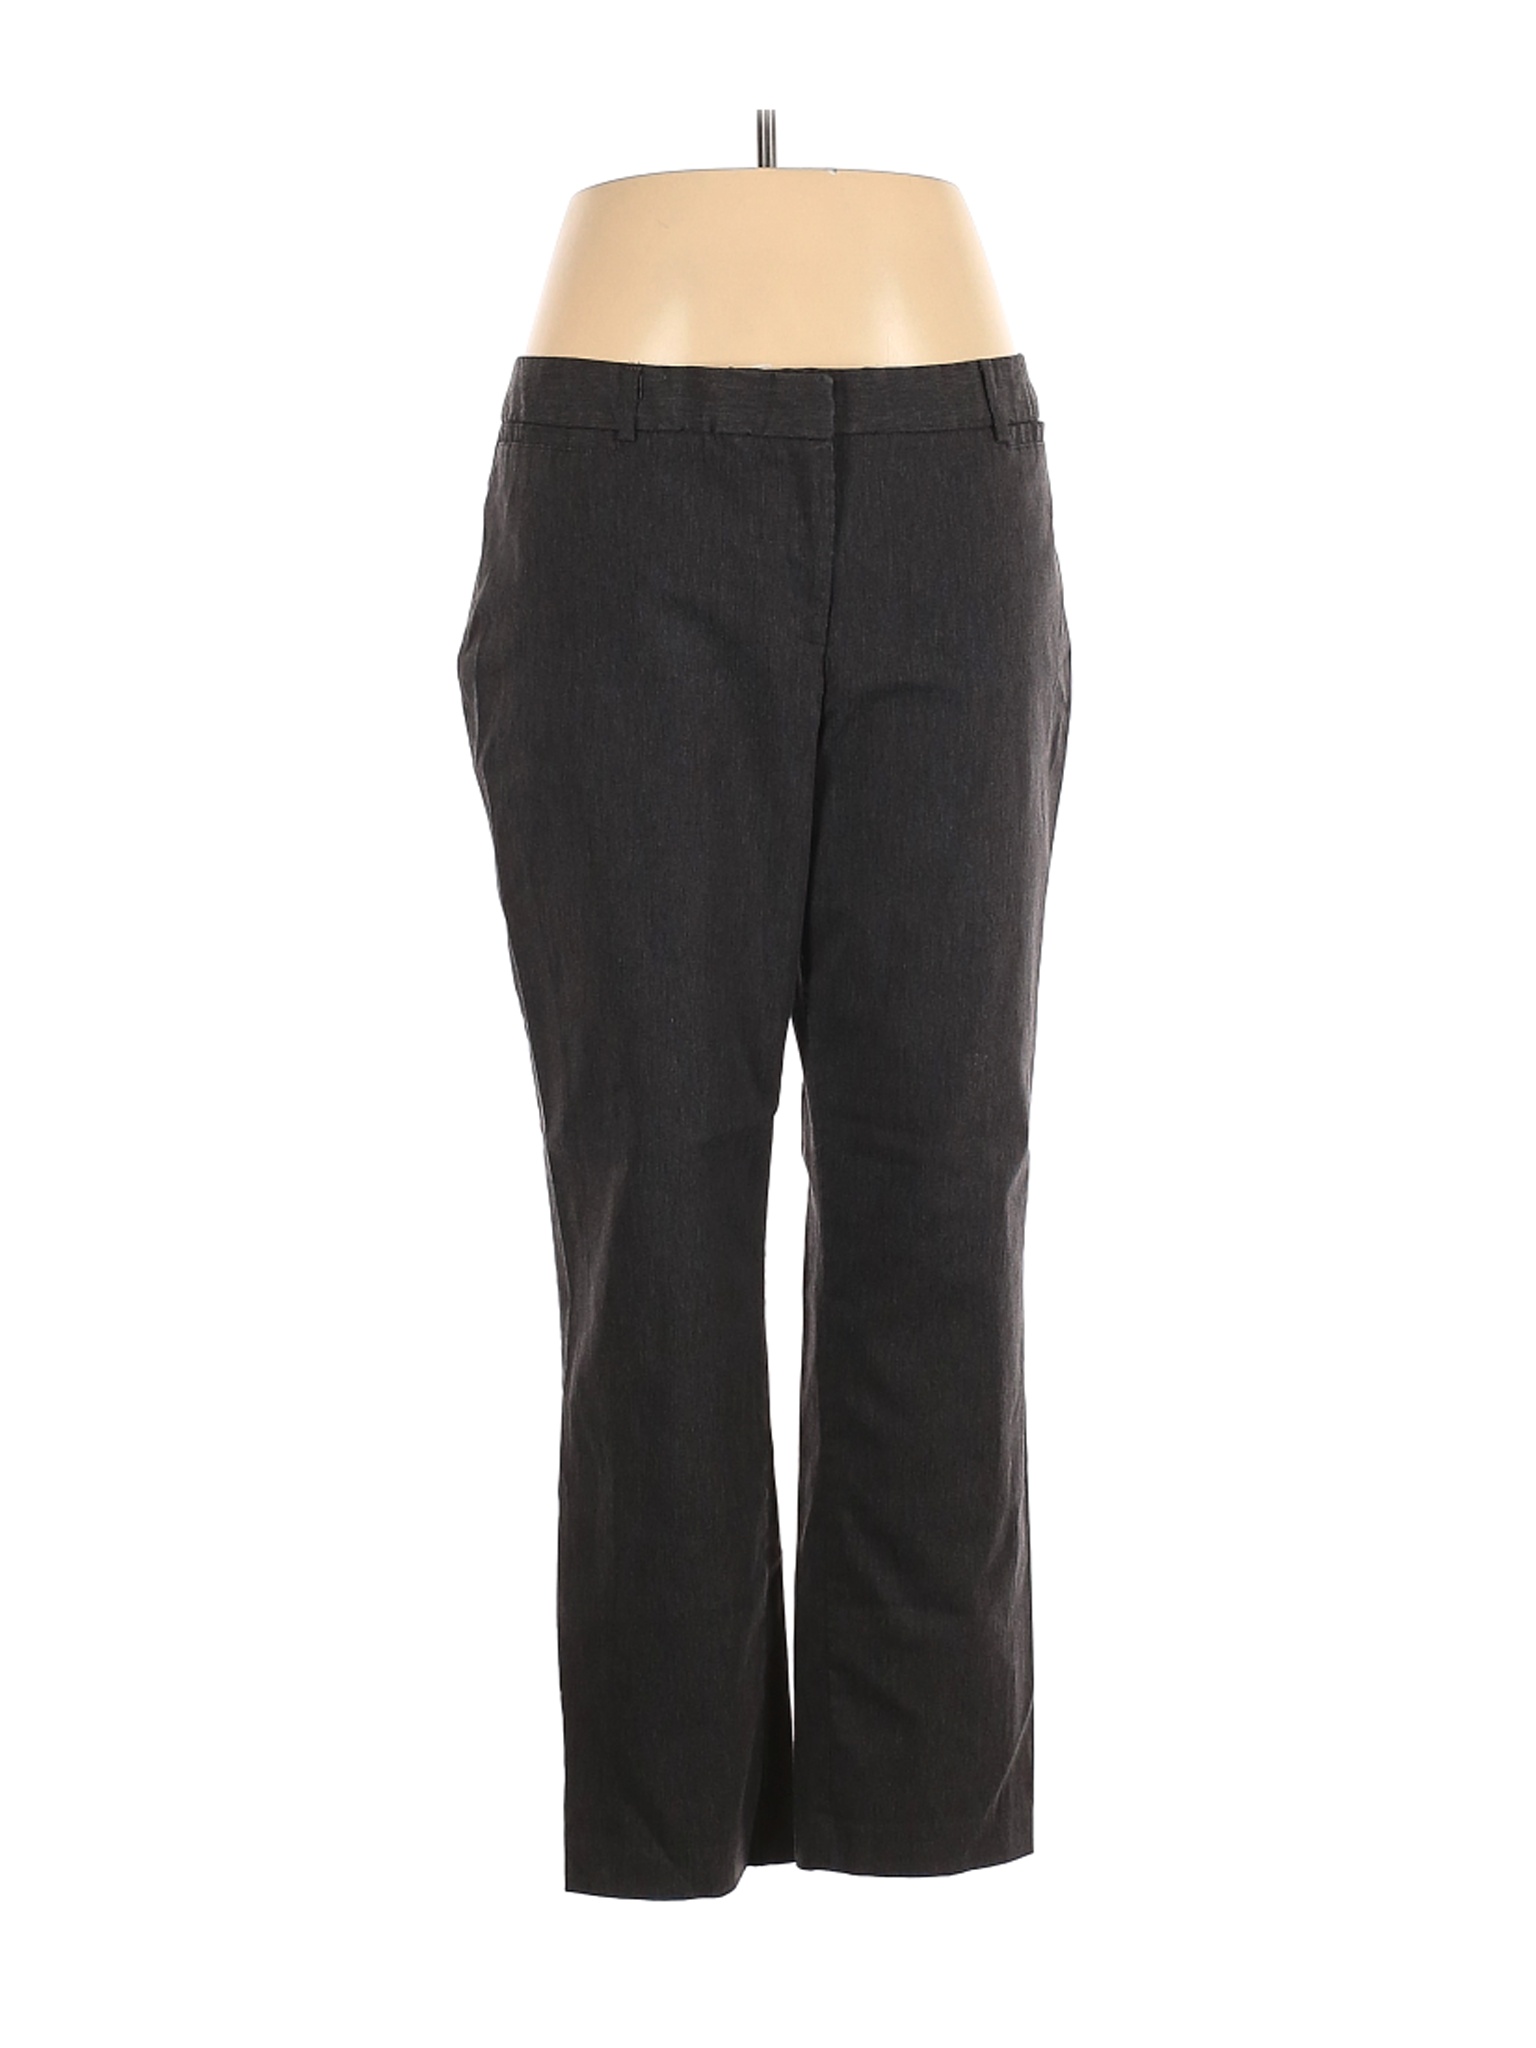 George Women Black Dress Pants 16 | eBay